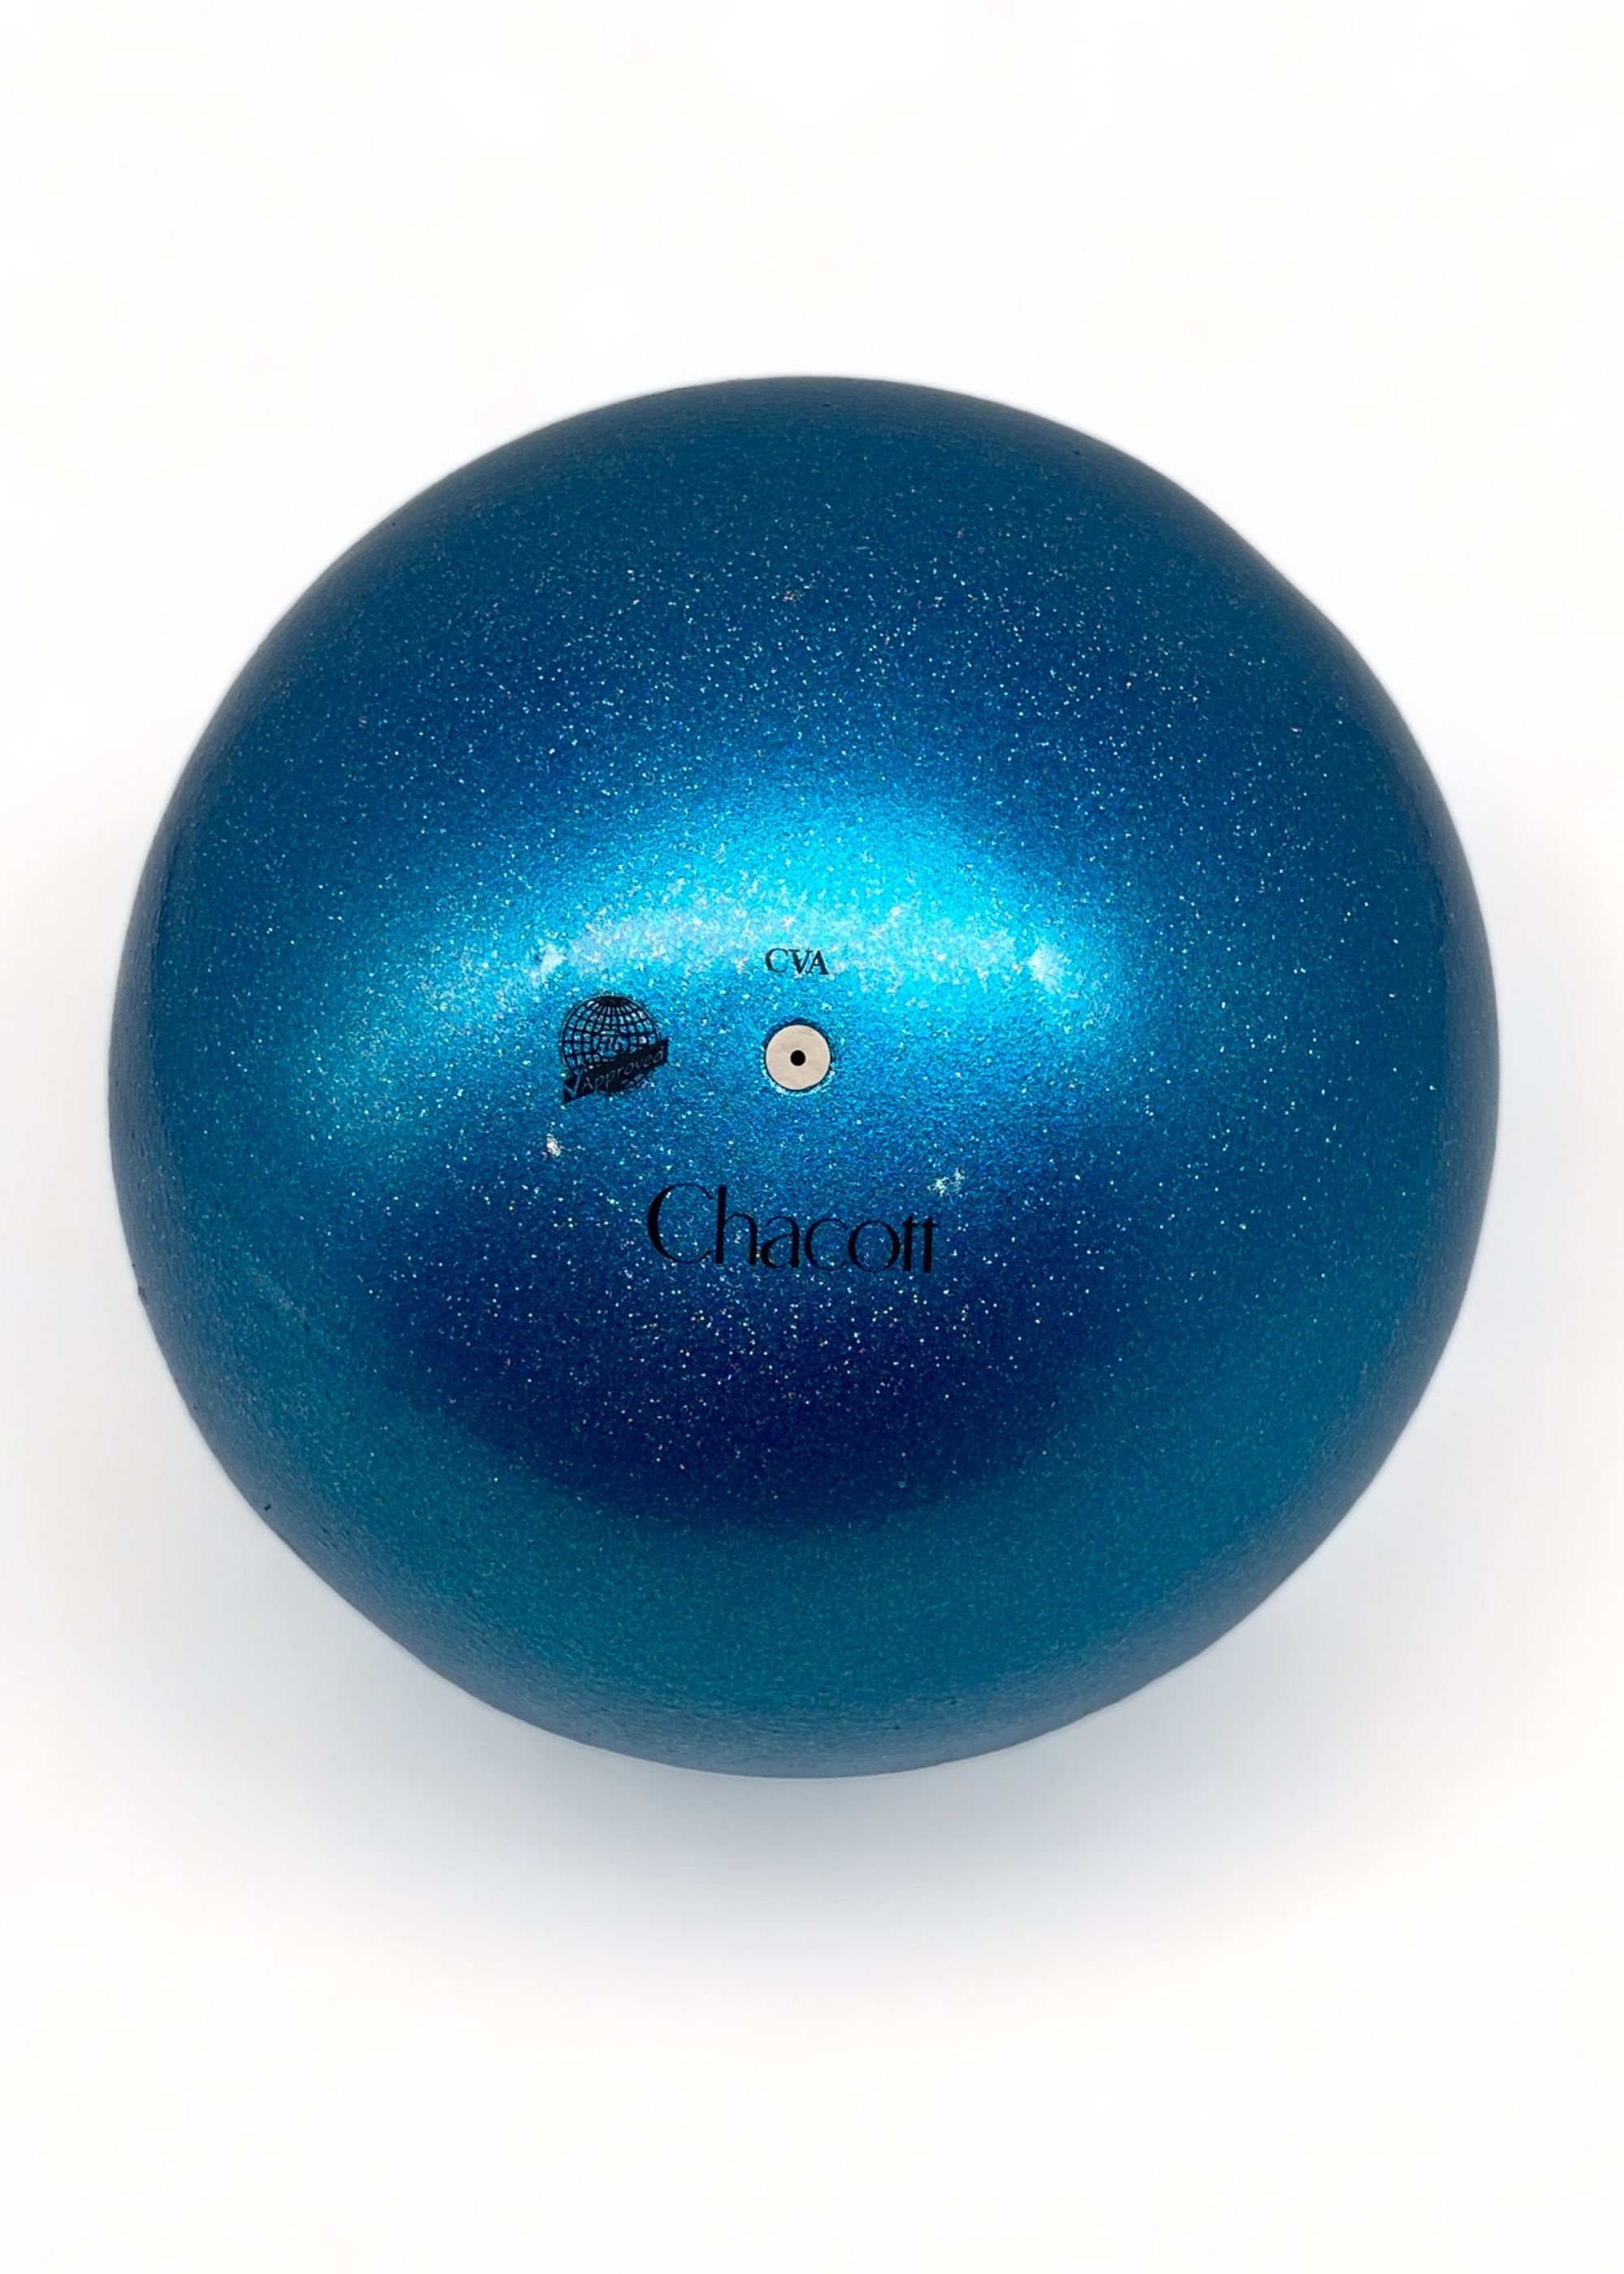 Ball for gymnastics Chacott 65013, 18.5cm